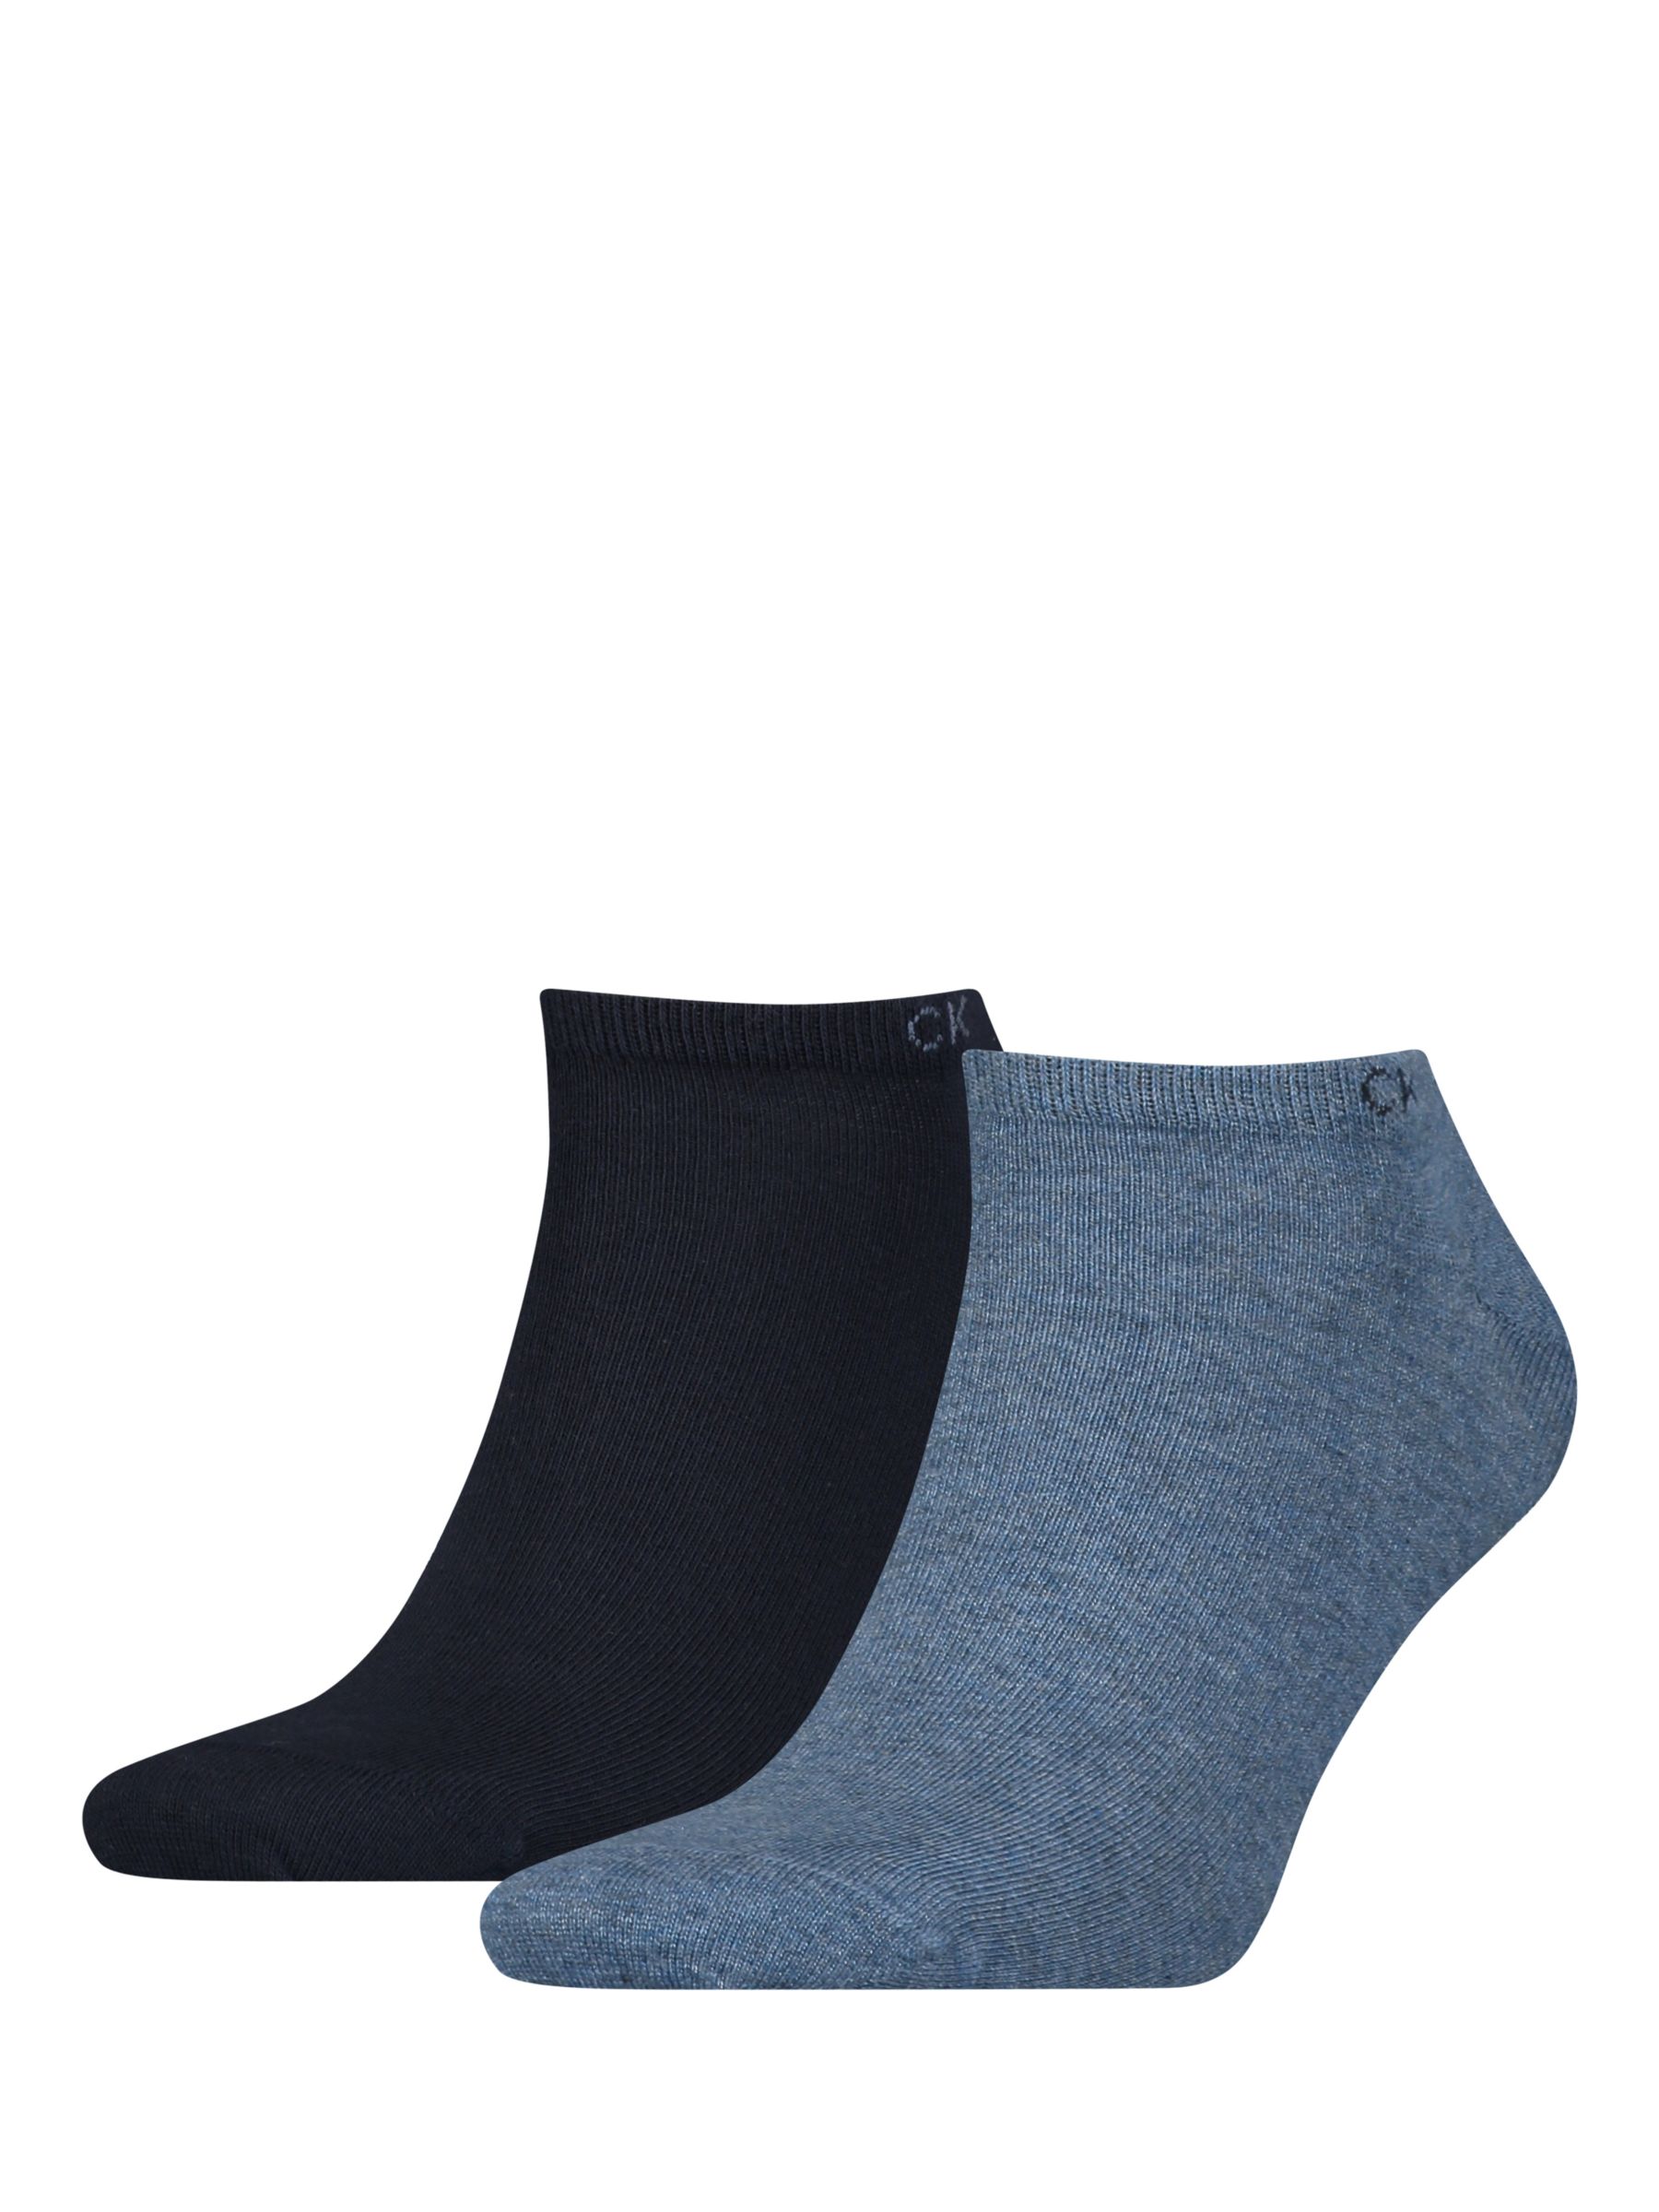 Buy Calvin Klein Trainer Socks, Pack of 2 Online at johnlewis.com